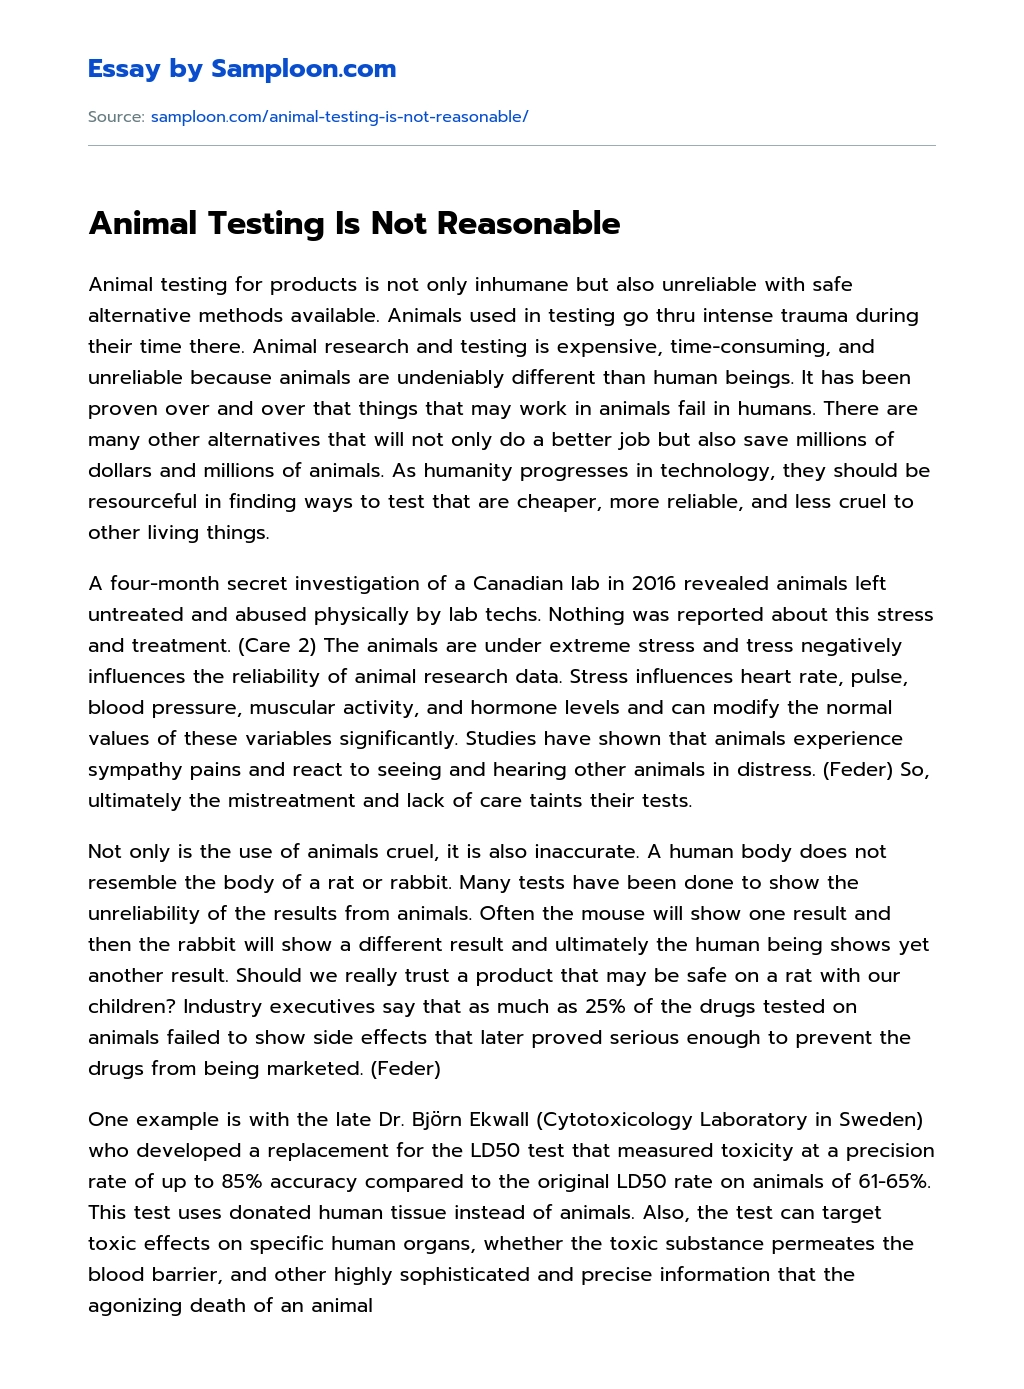 Animal Testing Is Not Reasonable essay